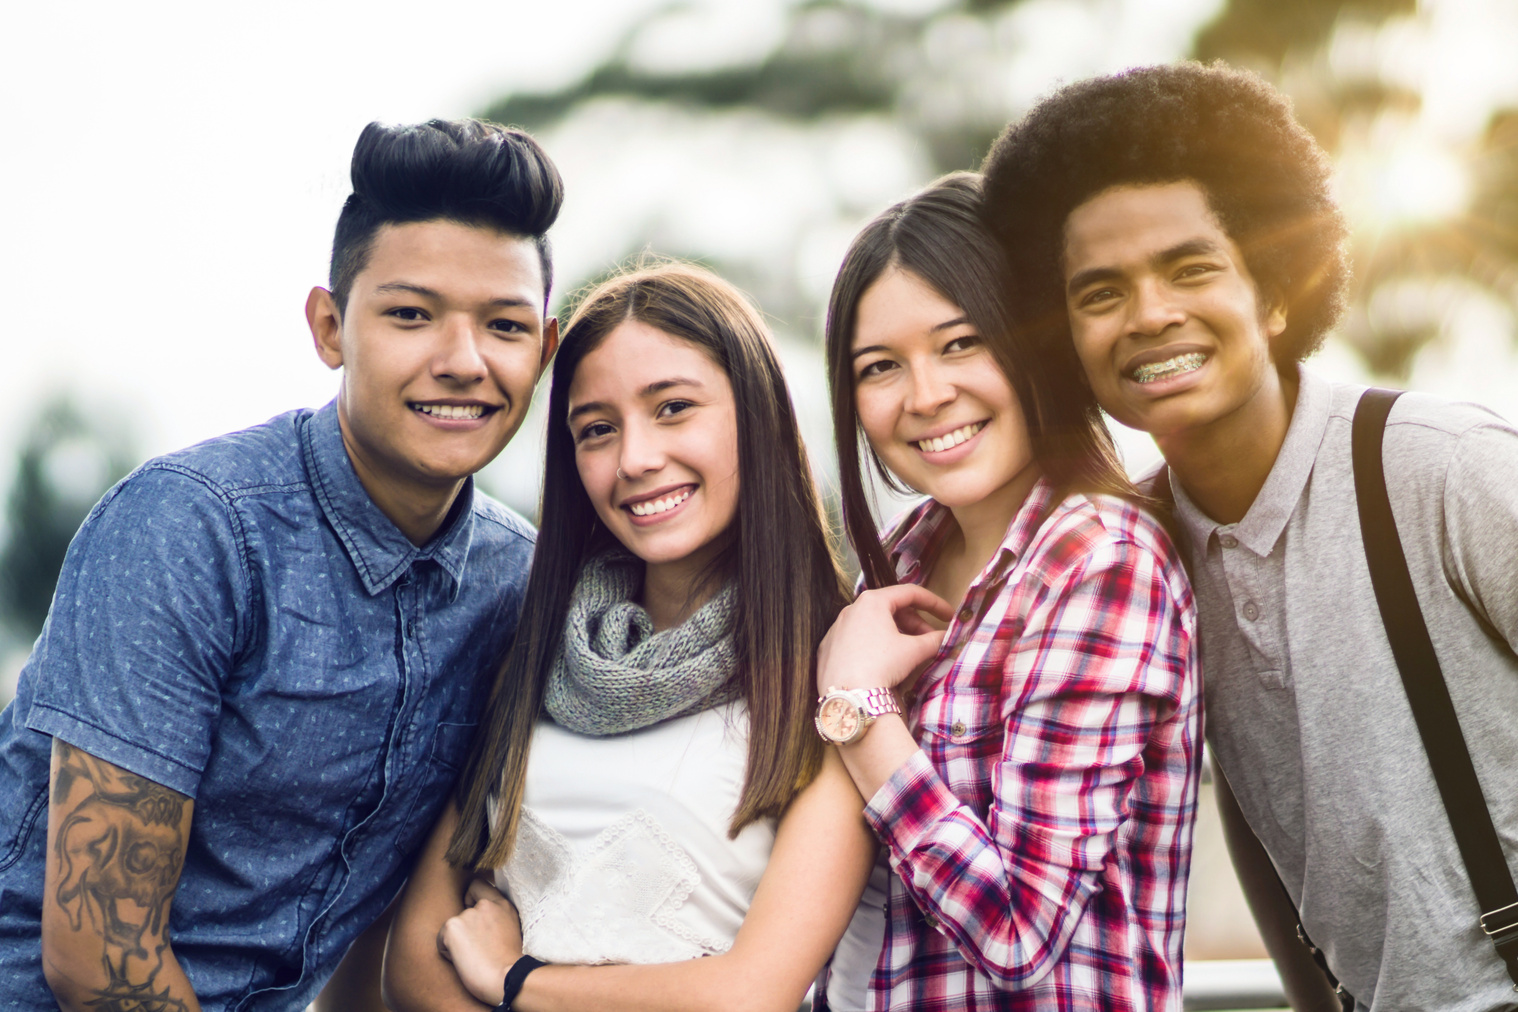 Diverse group of teens smiling at camera